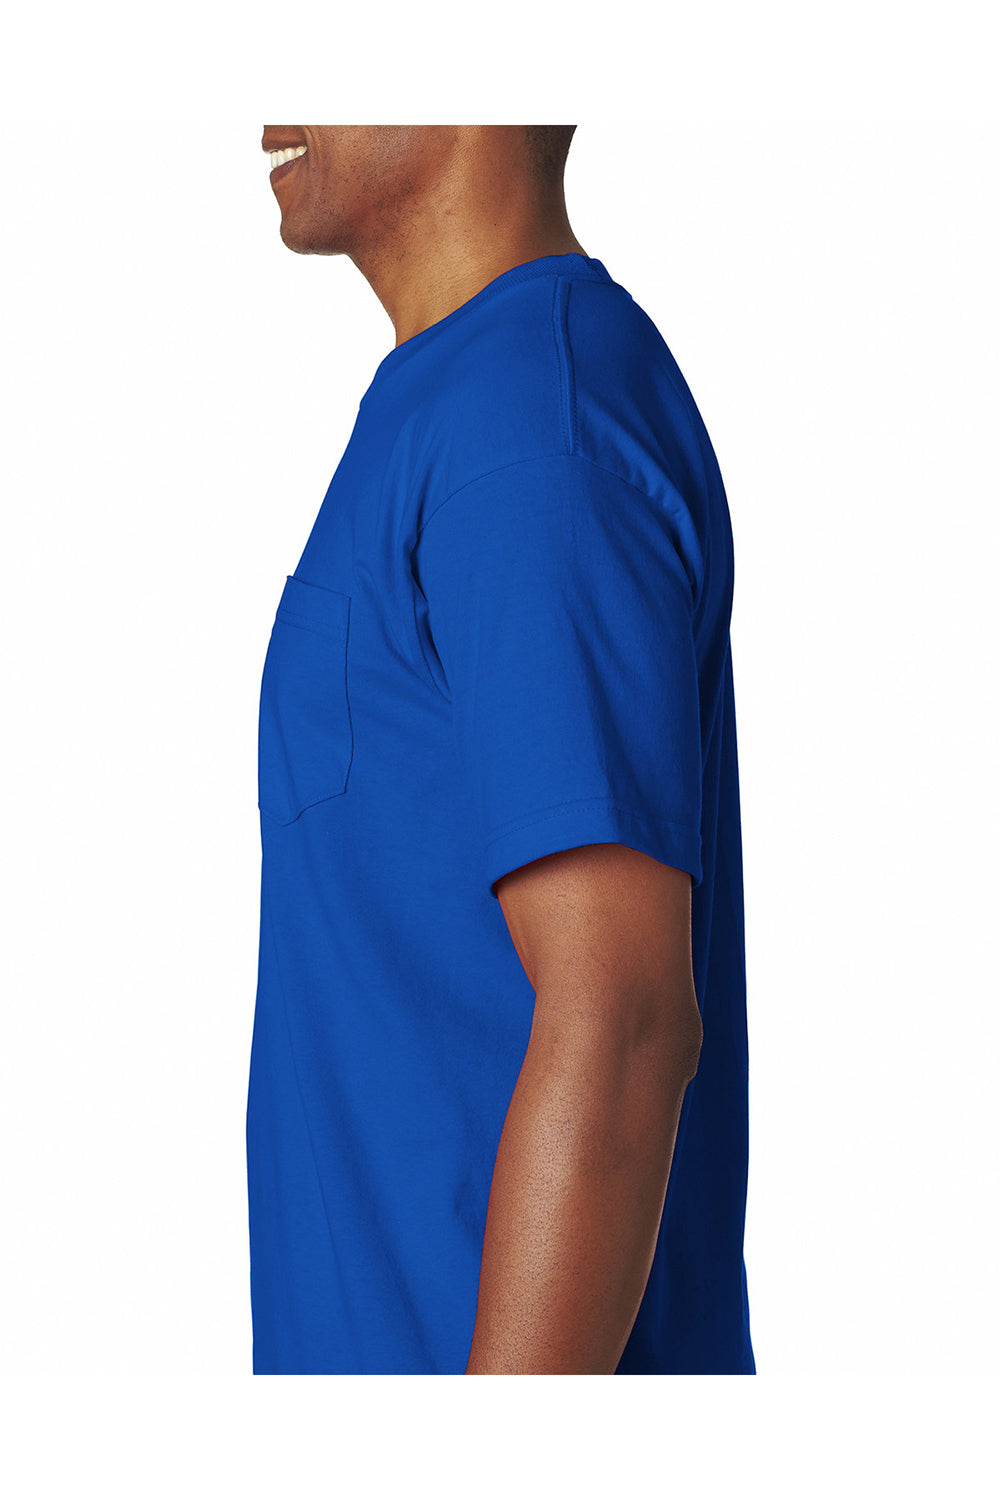 Bayside BA7100 Mens USA Made Short Sleeve Crewneck T-Shirt w/ Pocket Royal Blue Model Side